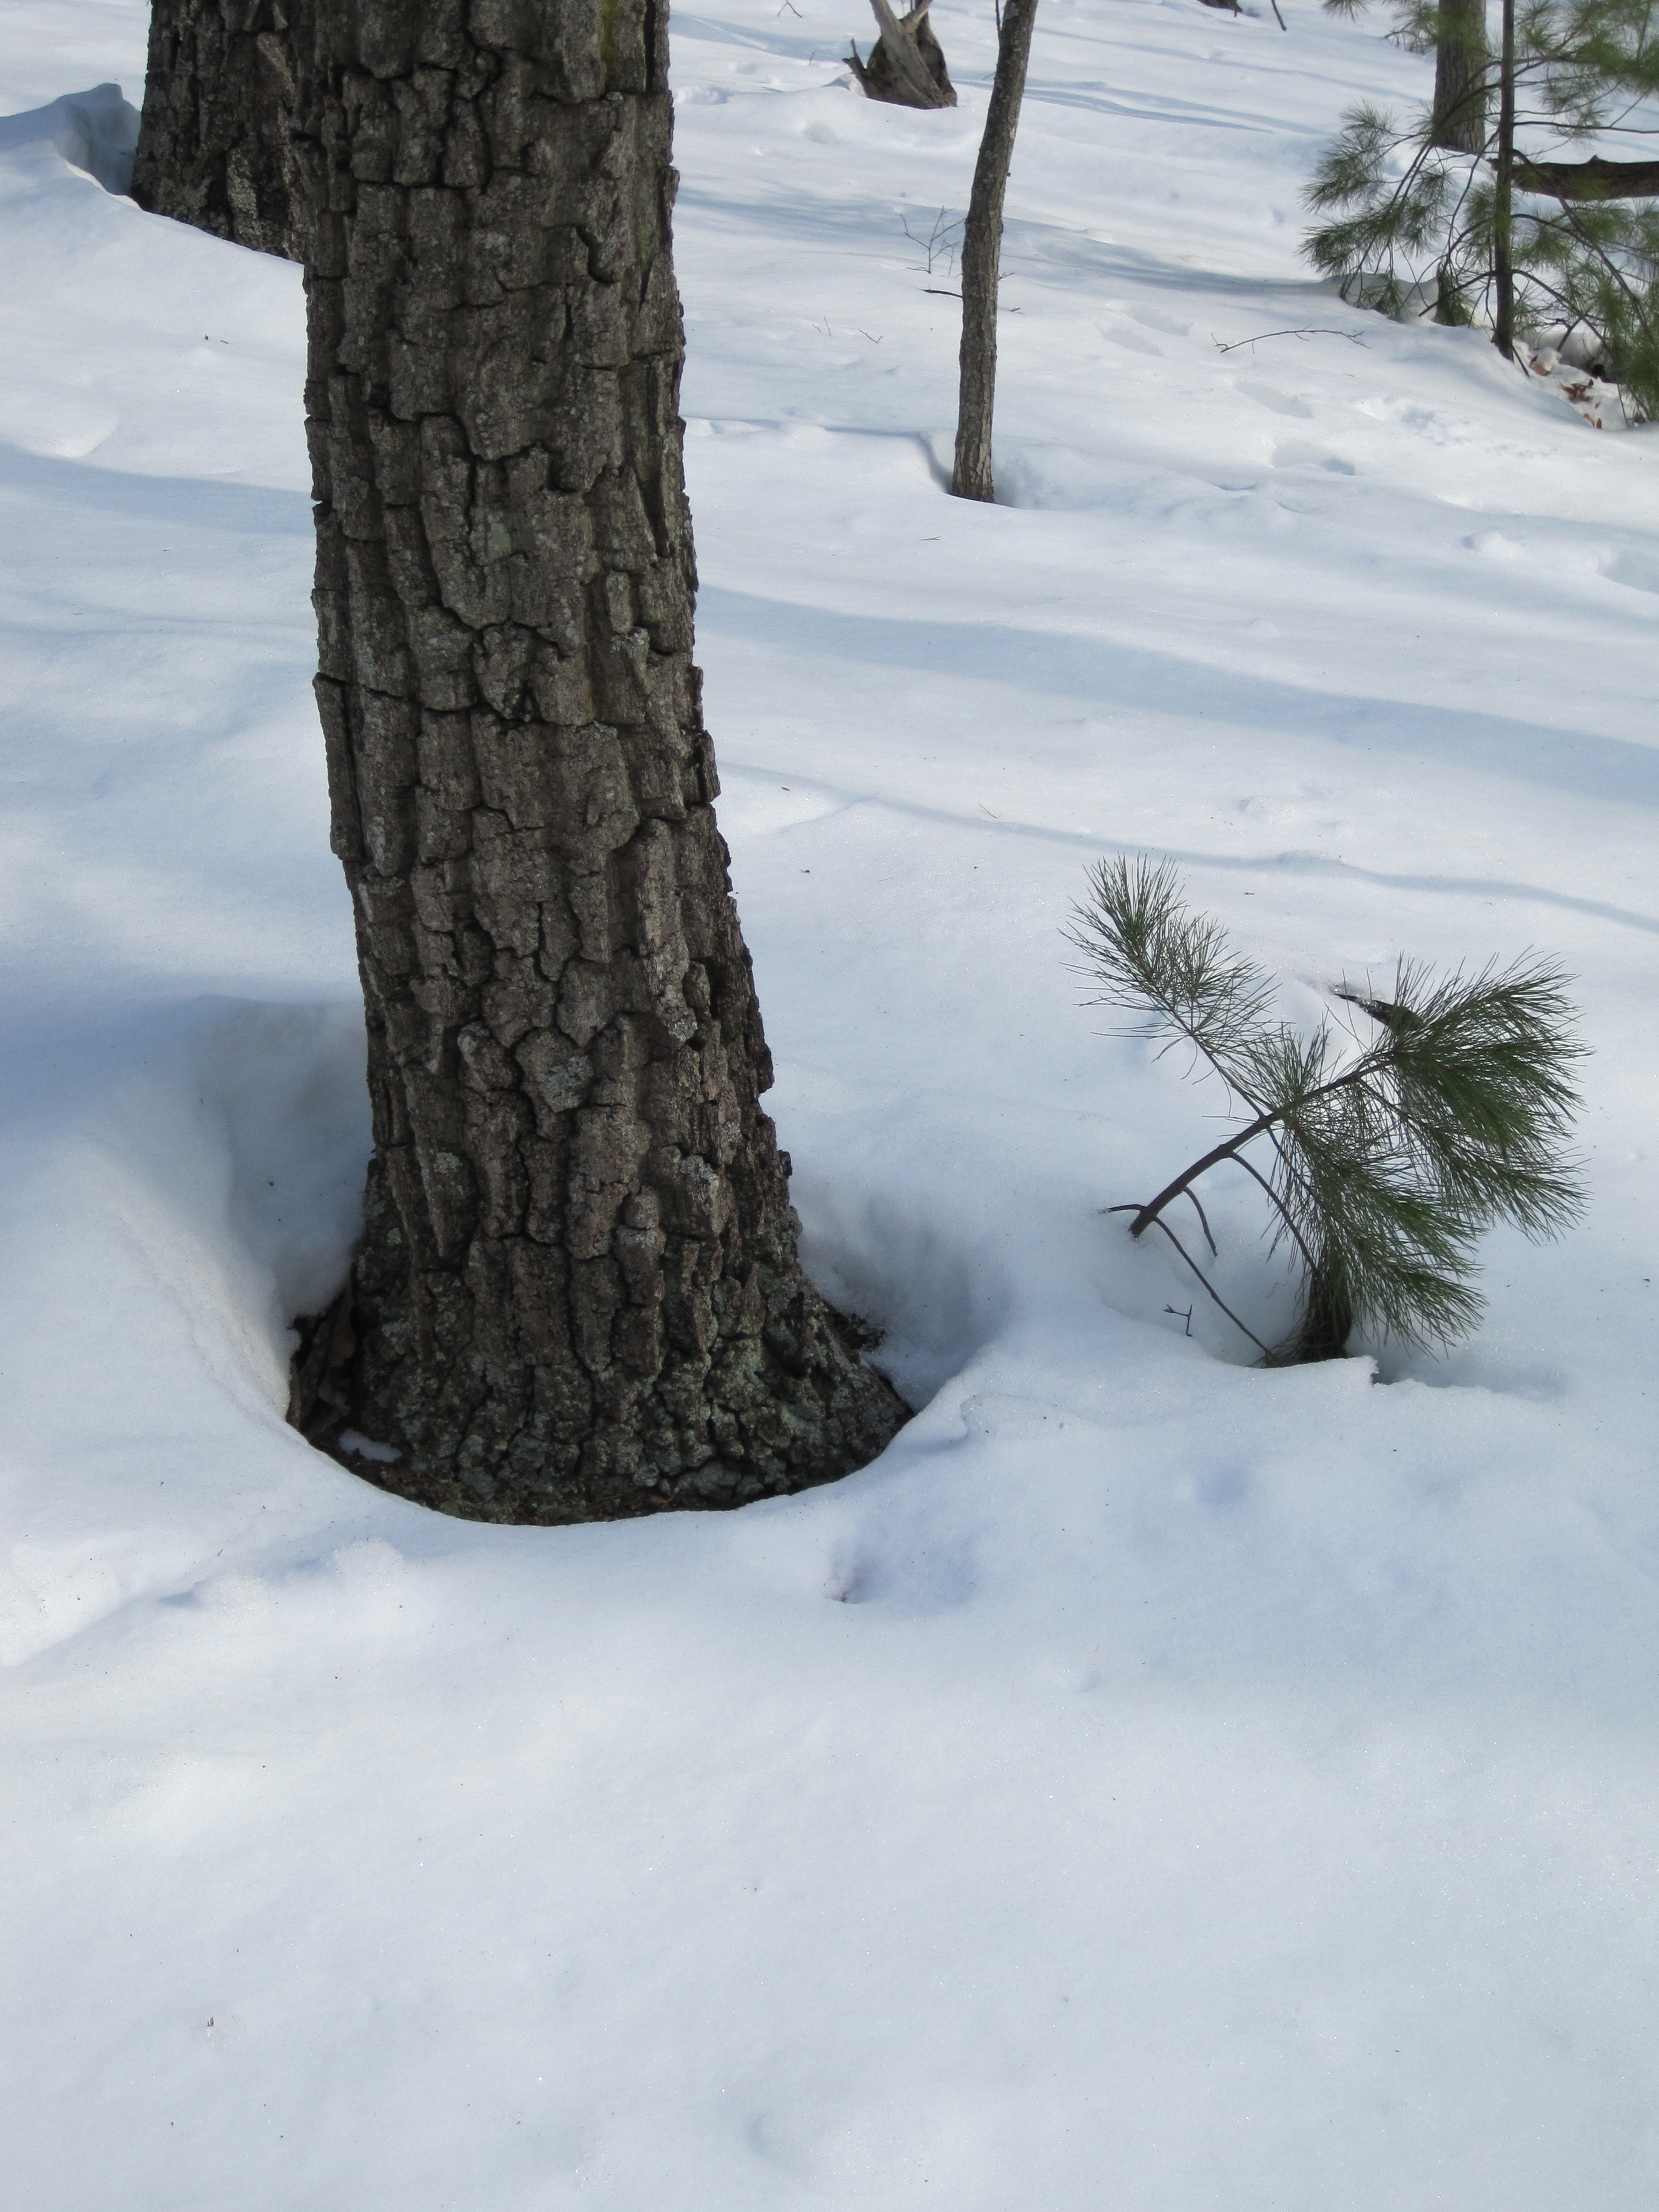 Trees and snow - winter melt physics | Ask MetaFilter